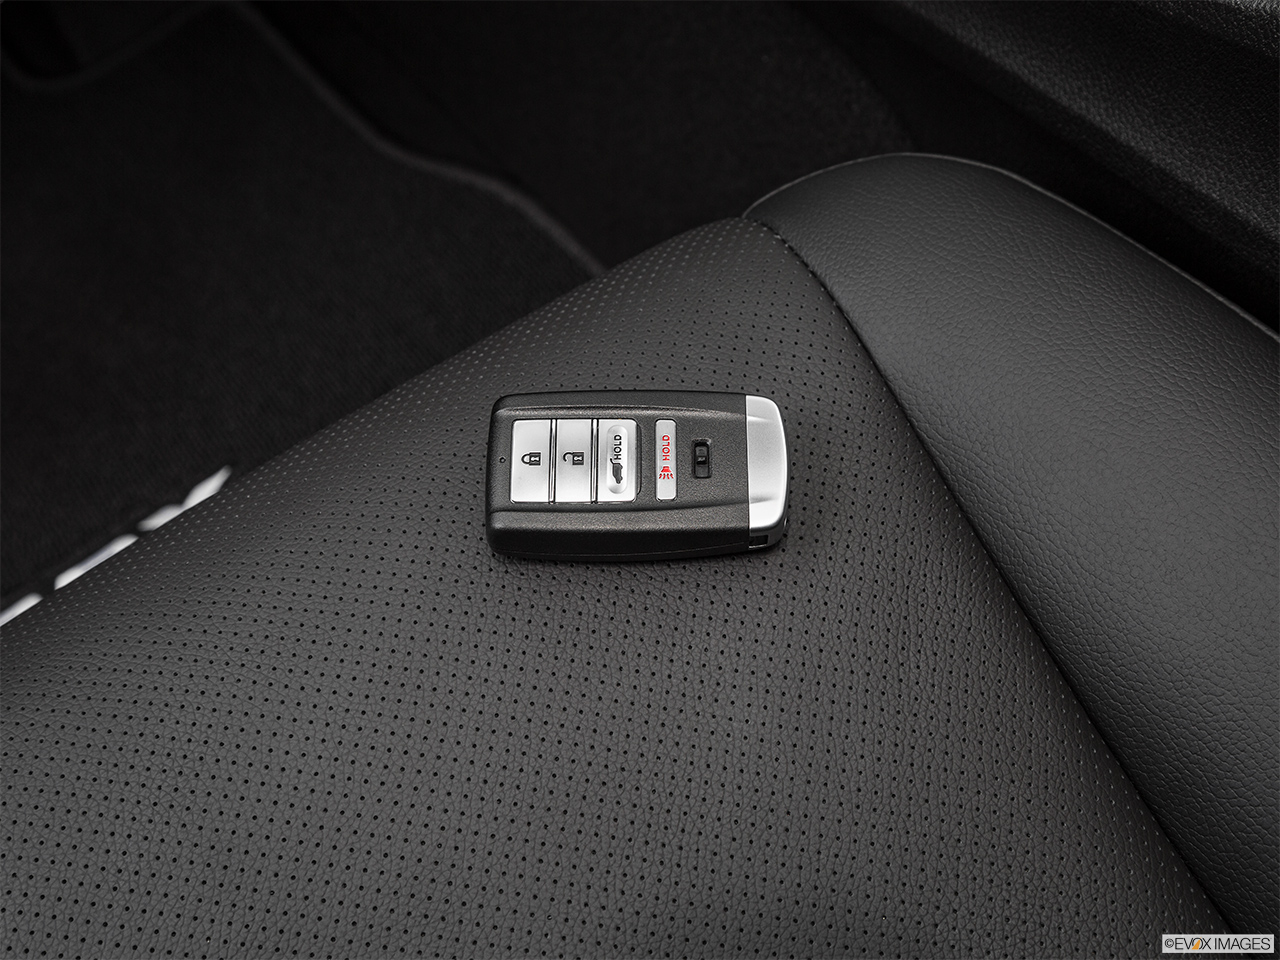 2017 Acura RDX AWD Key fob on driver's seat. 